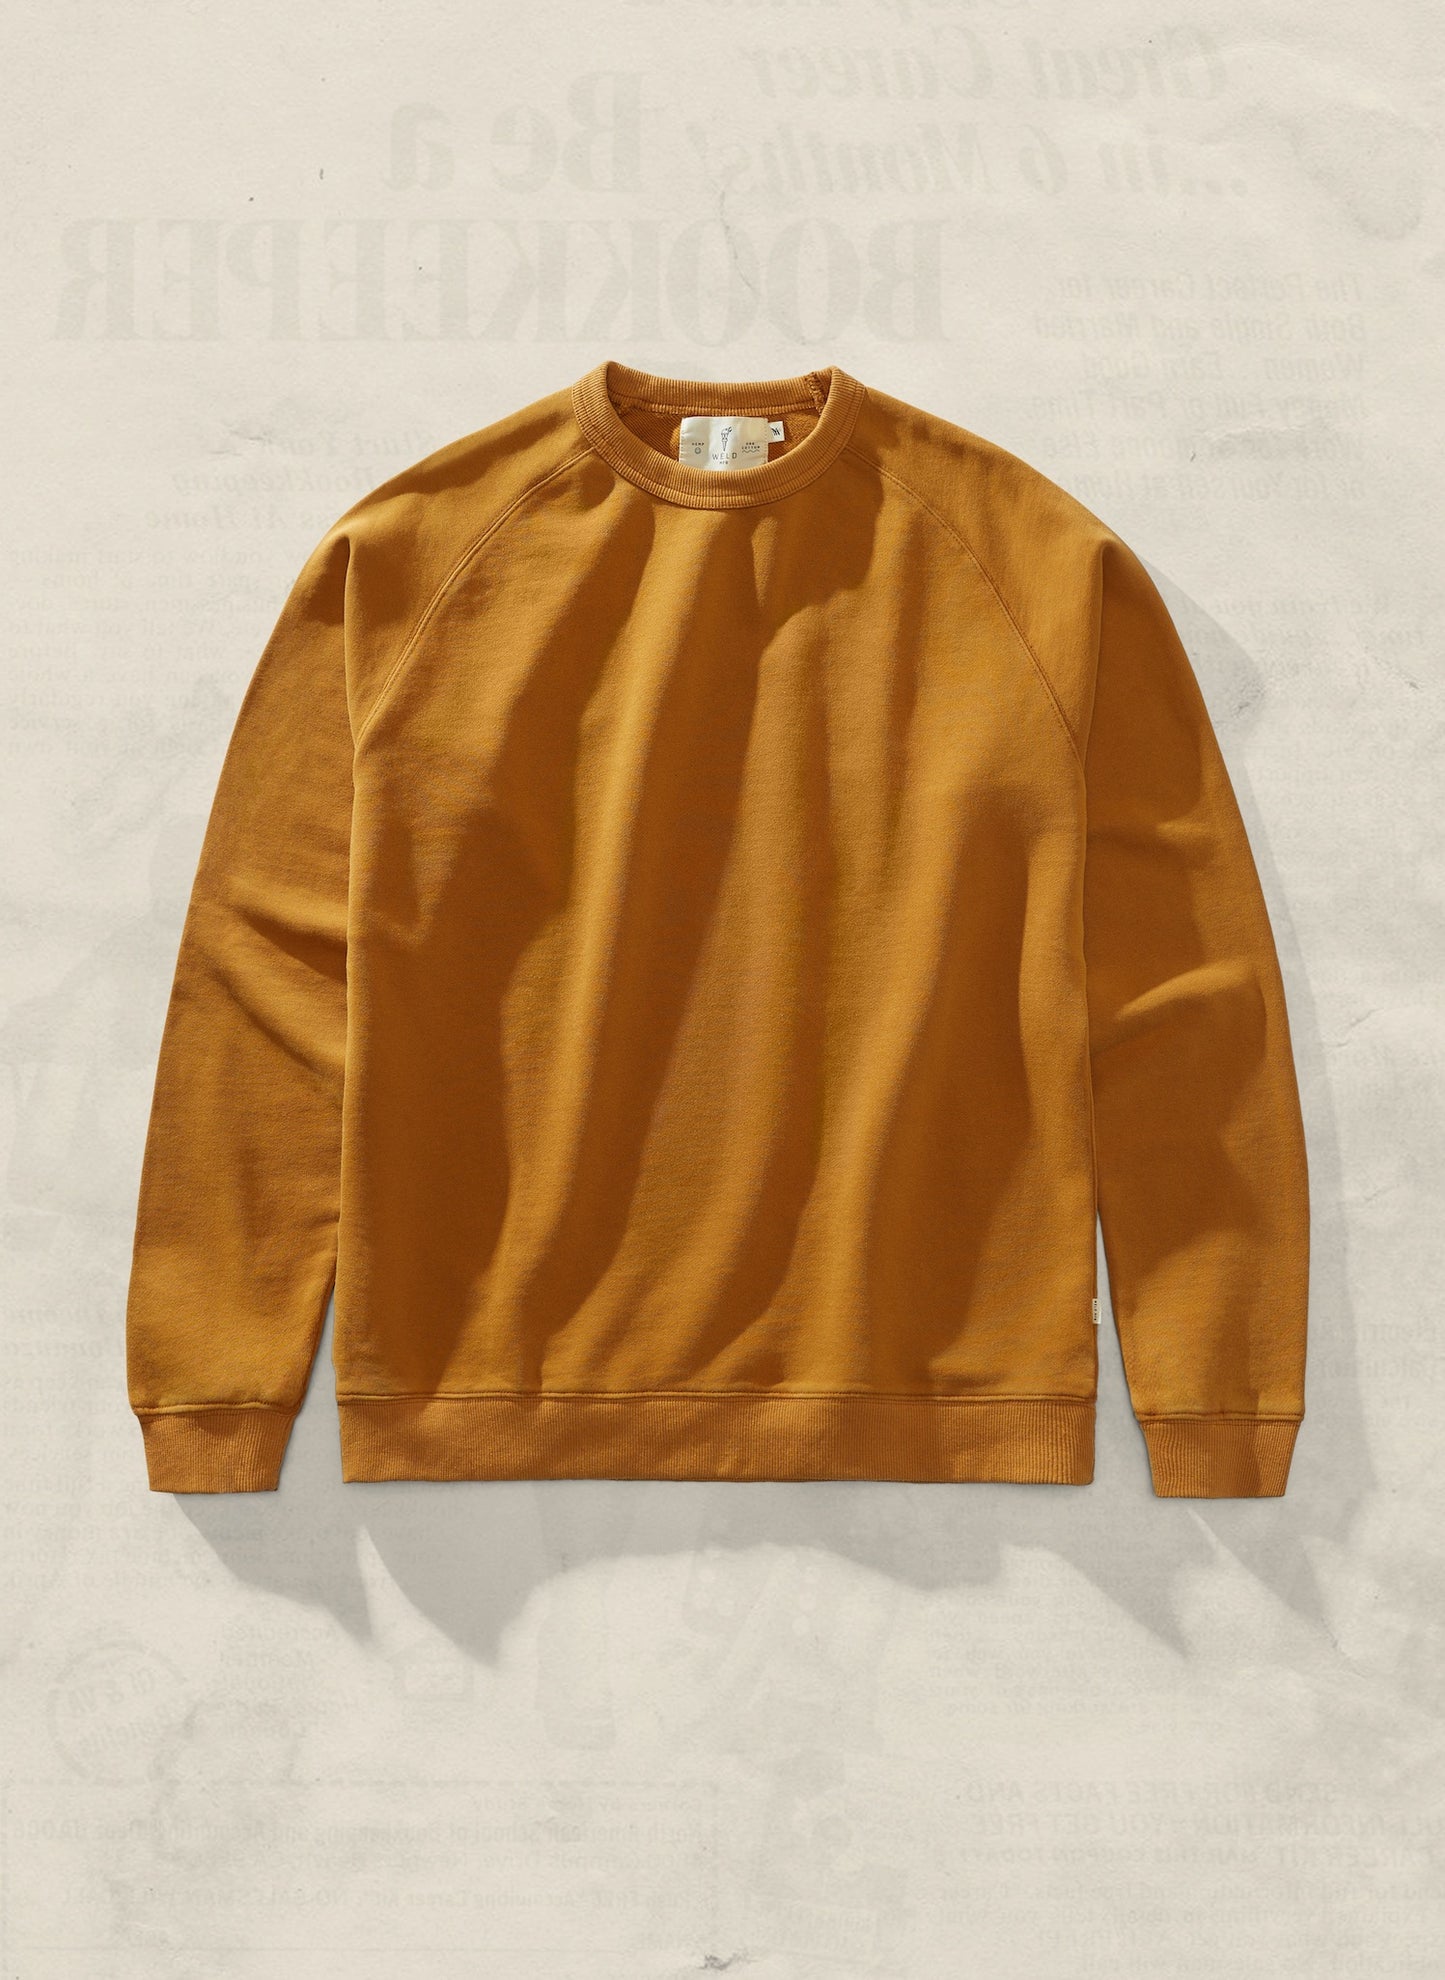 Soft Comfy Hemp Crewneck Sweatshirts with a Vintage Wash by Weld Mfg - Rust and Black Sweatshirts